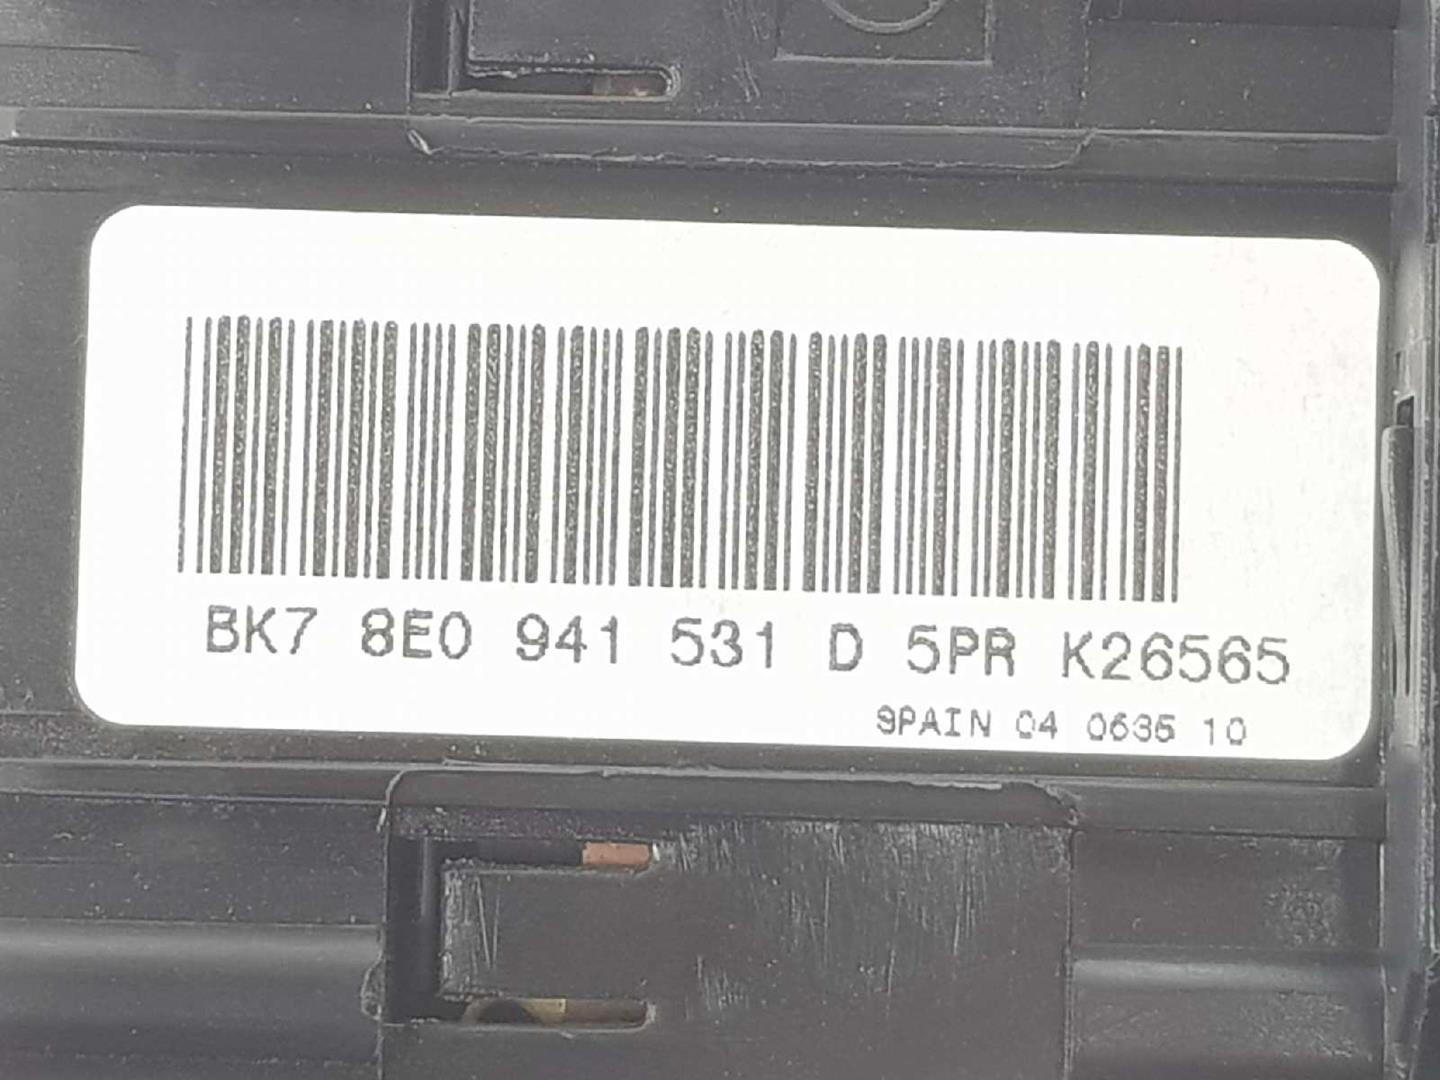 AUDI A4 B6/8E (2000-2005) Šviesų jungiklis (jungtukas) 8E0941531D5PR, 8E0941531D 19723426